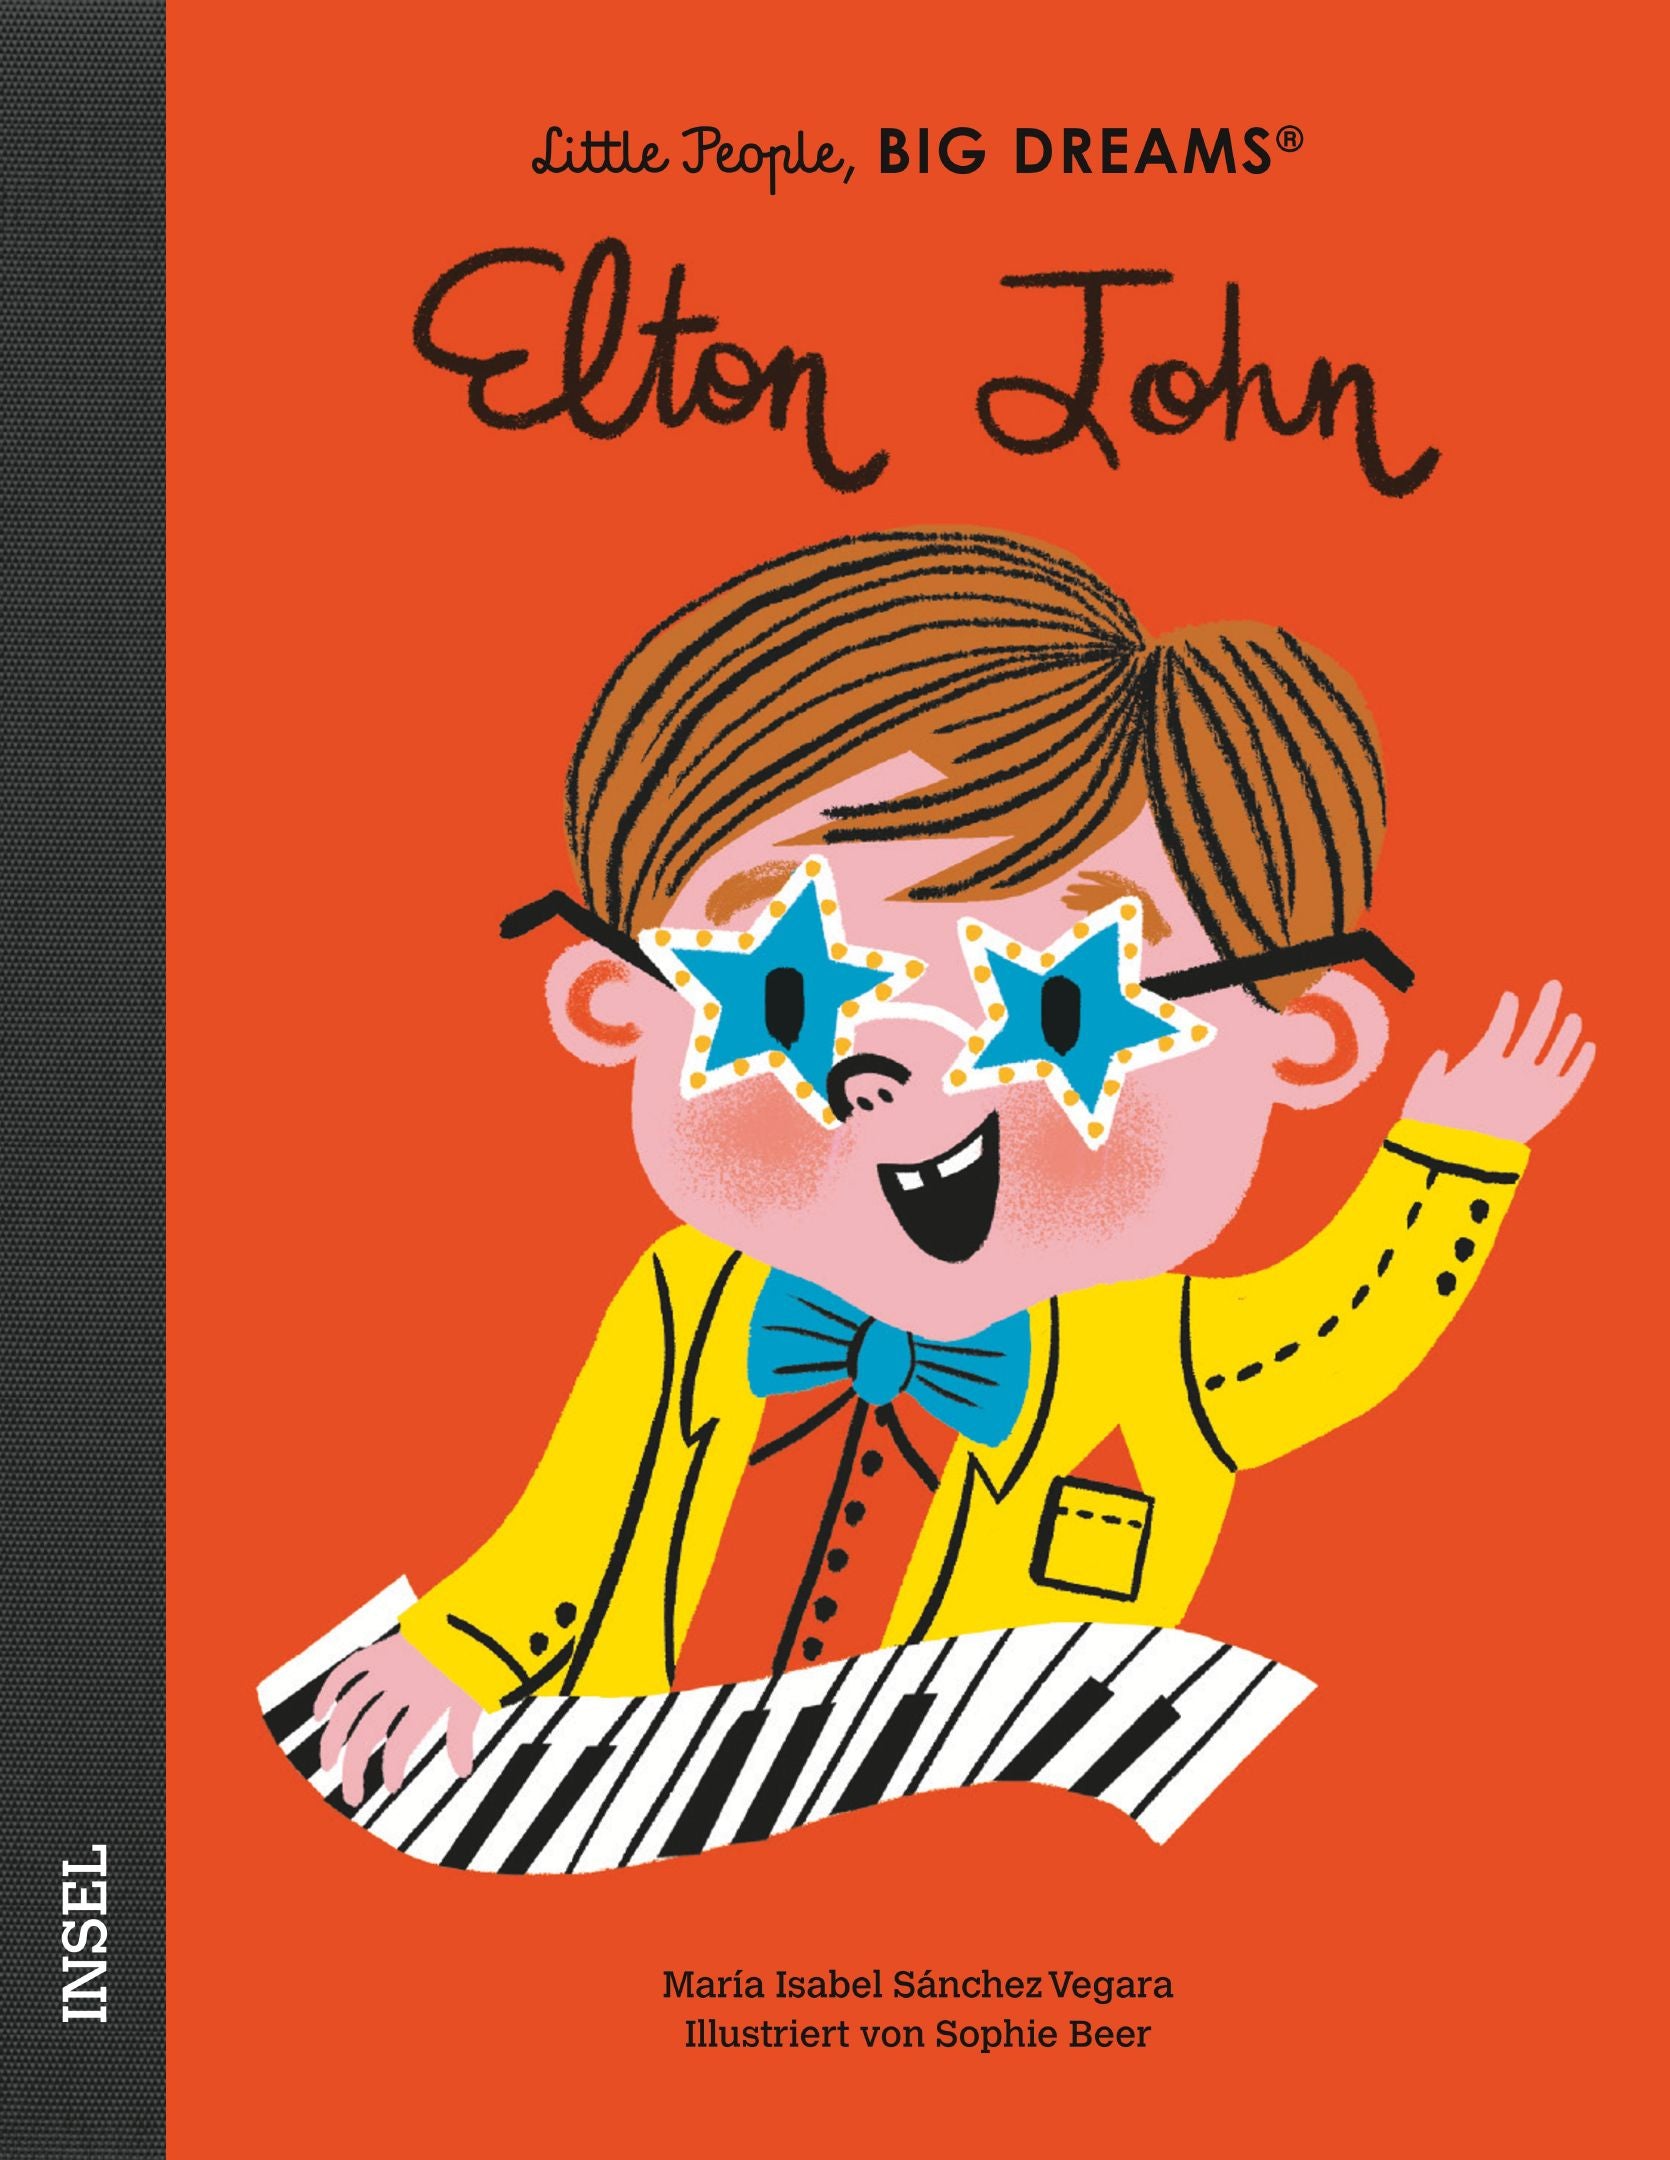 Little People - Elton John